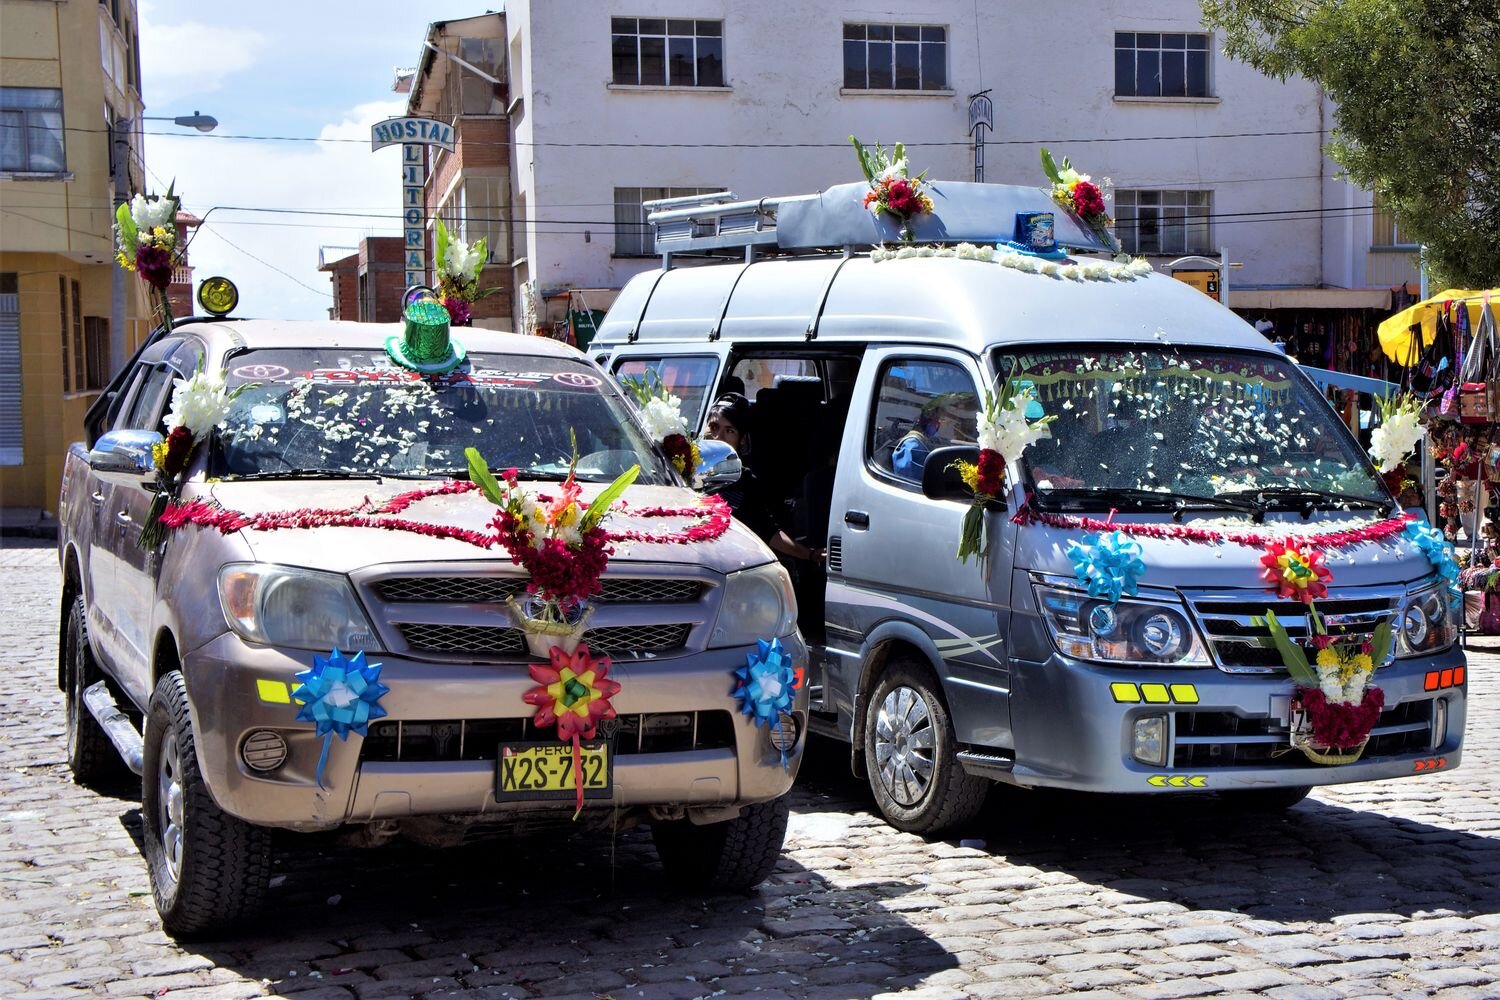  Ornamented vehicles for a religious celebration in Copacabana. Bolivia. 